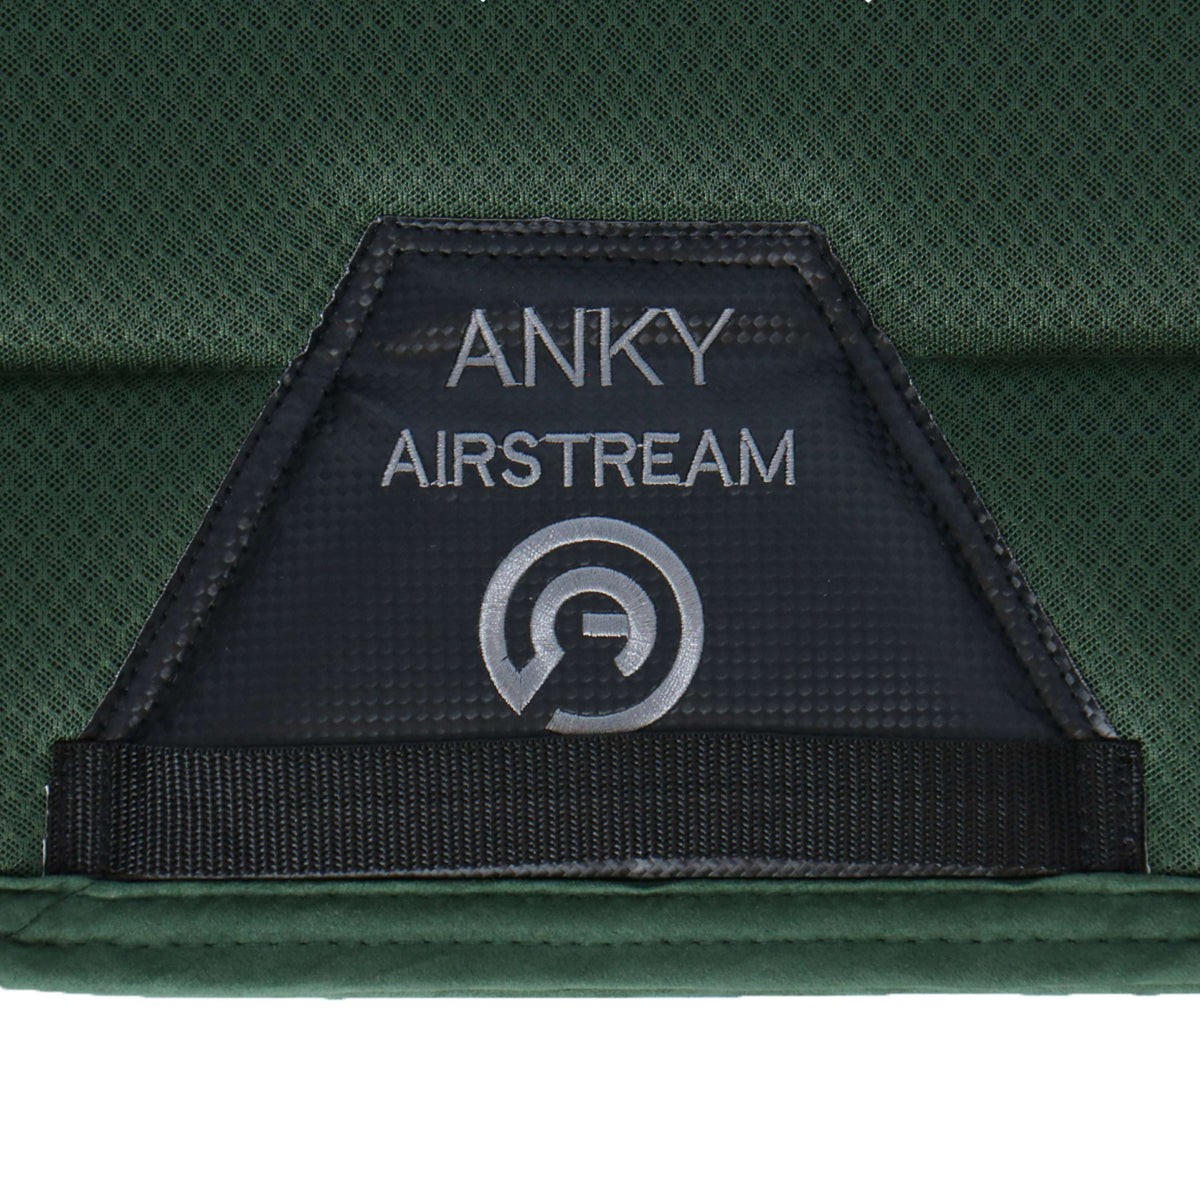 ANKY Schabracke Air Stream 2 Dressur Sattes grün